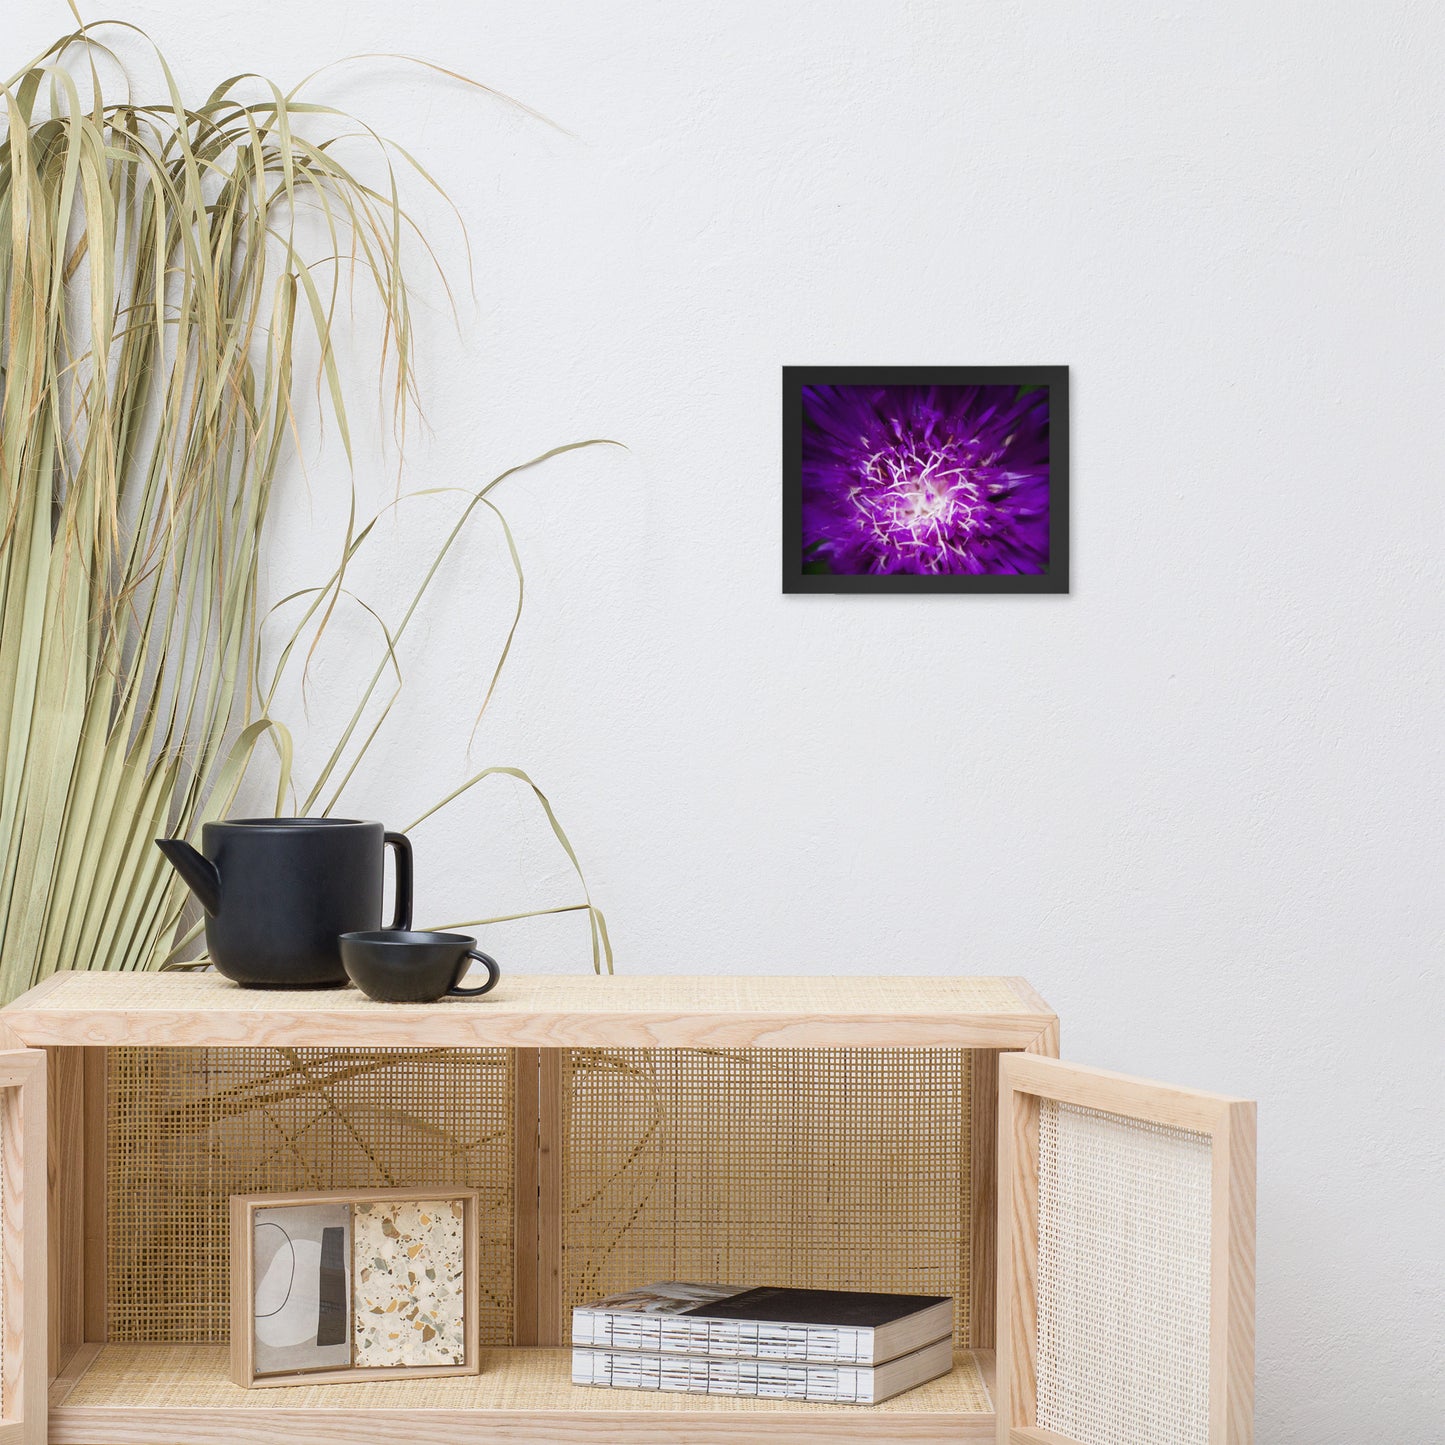 Minimalist Living Room Wall Decor: Purple Abstract Flower - Botanical / Floral / Flora / Flowers / Nature Photograph Framed Wall Art Print - Artwork - Wall Decor